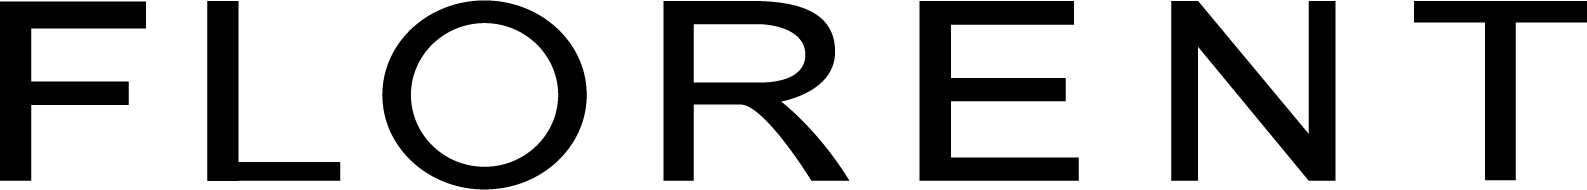 FLORENT(フローレント)_logo